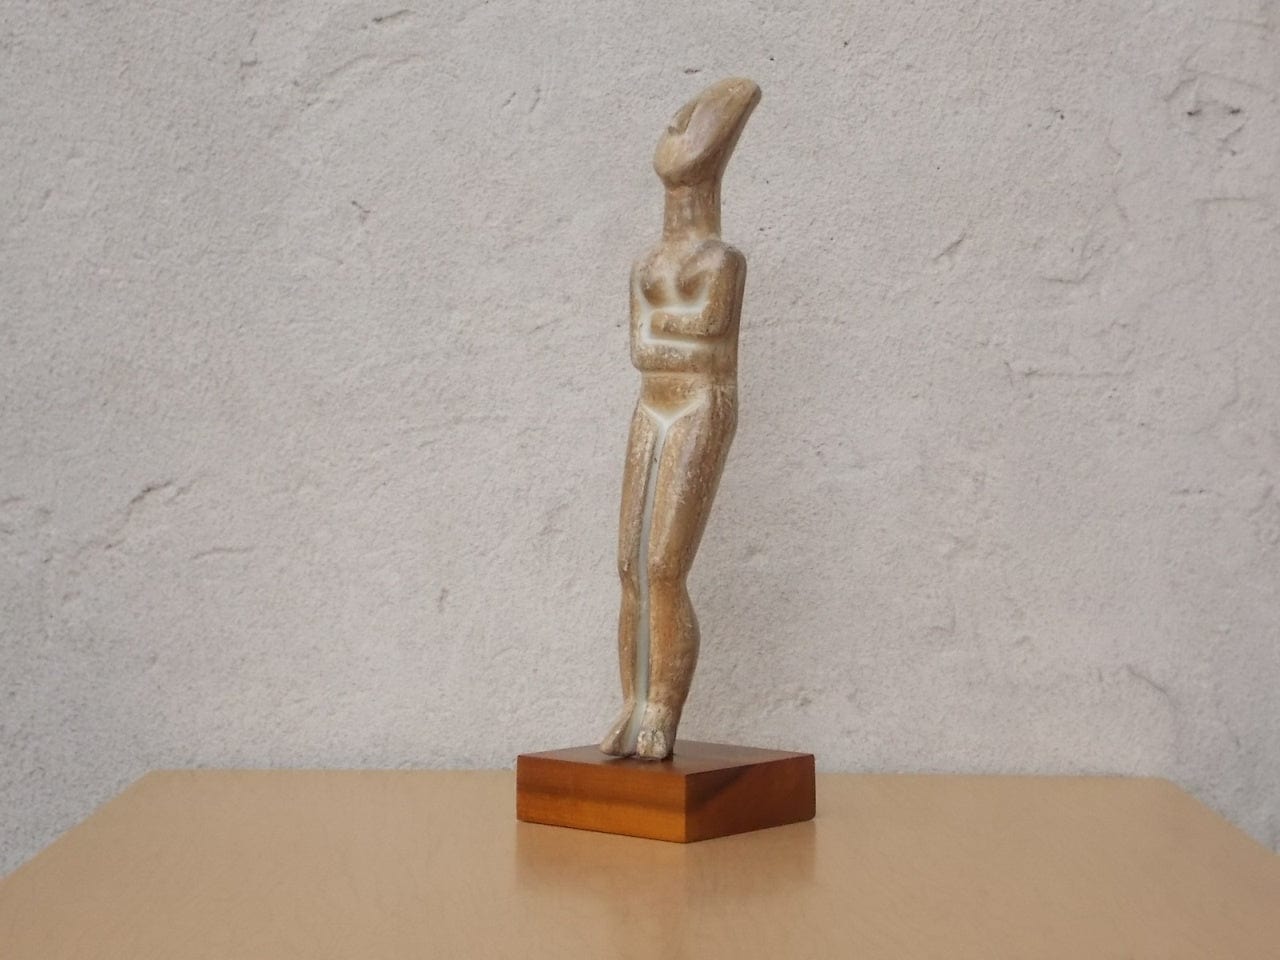 I Like Mike's Mid Century Modern Wall Decor & Art Metropolitan Museum of Art Greek Female Cycladic Figure, Table Sculpture